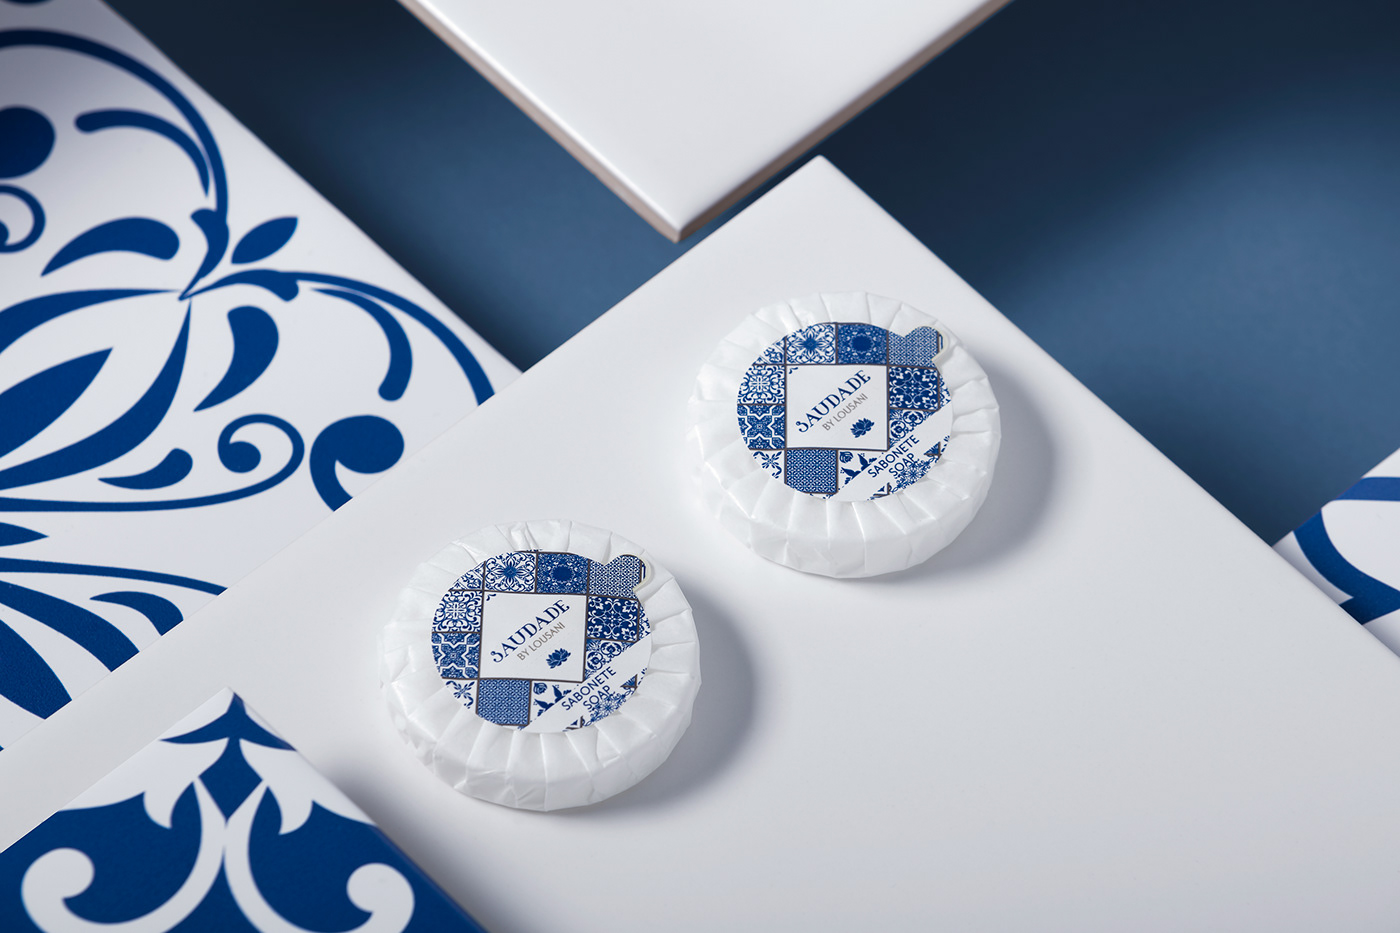 amenities Cosmetic design Packaging hotel azulejo Portugal